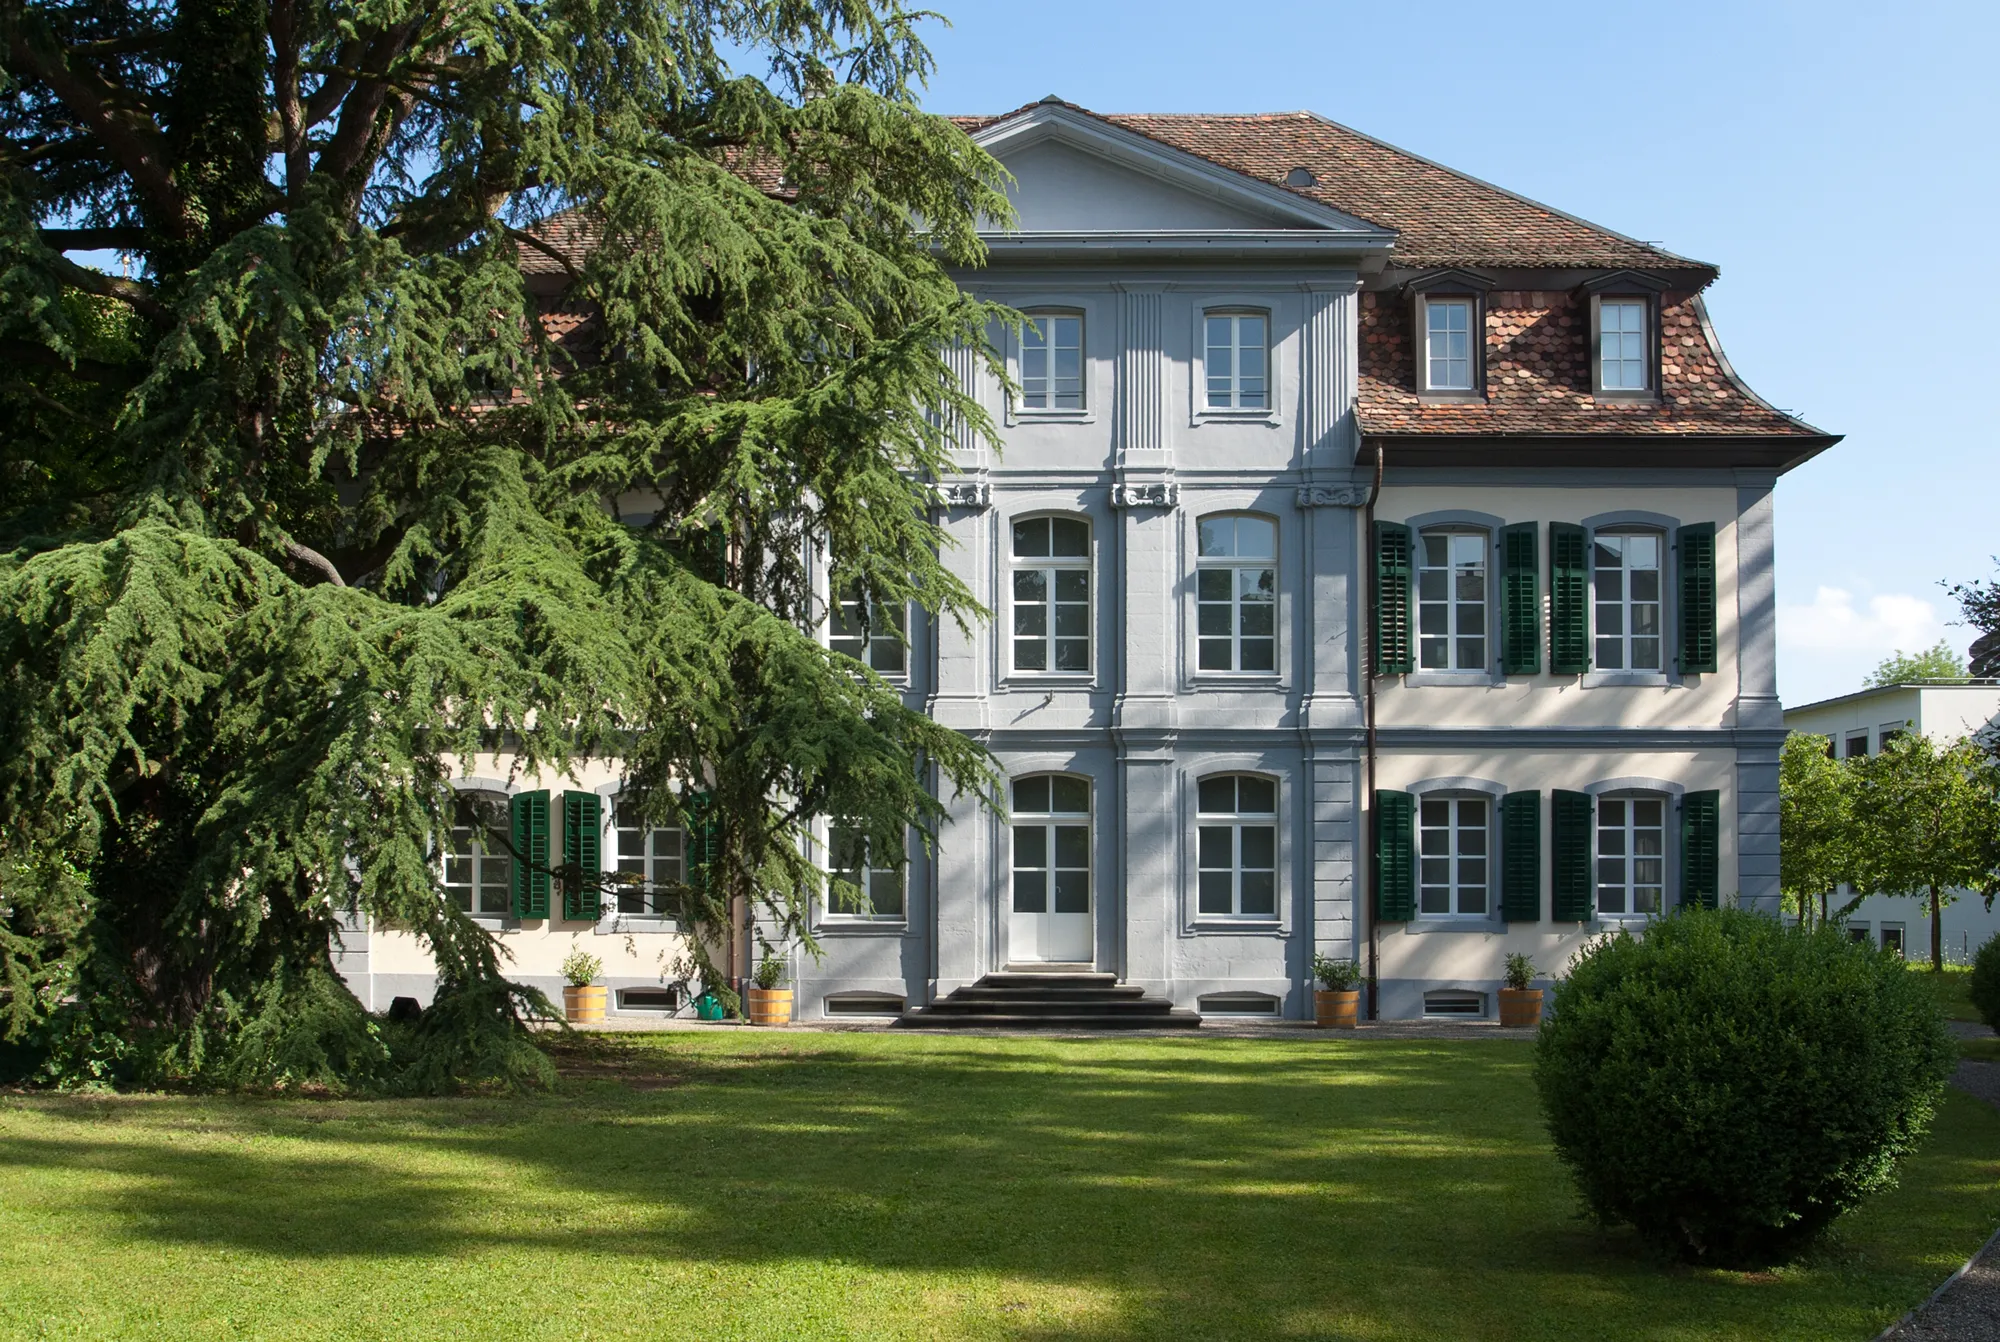 Photo showing: Haus zum Schlossgarten in Aarau